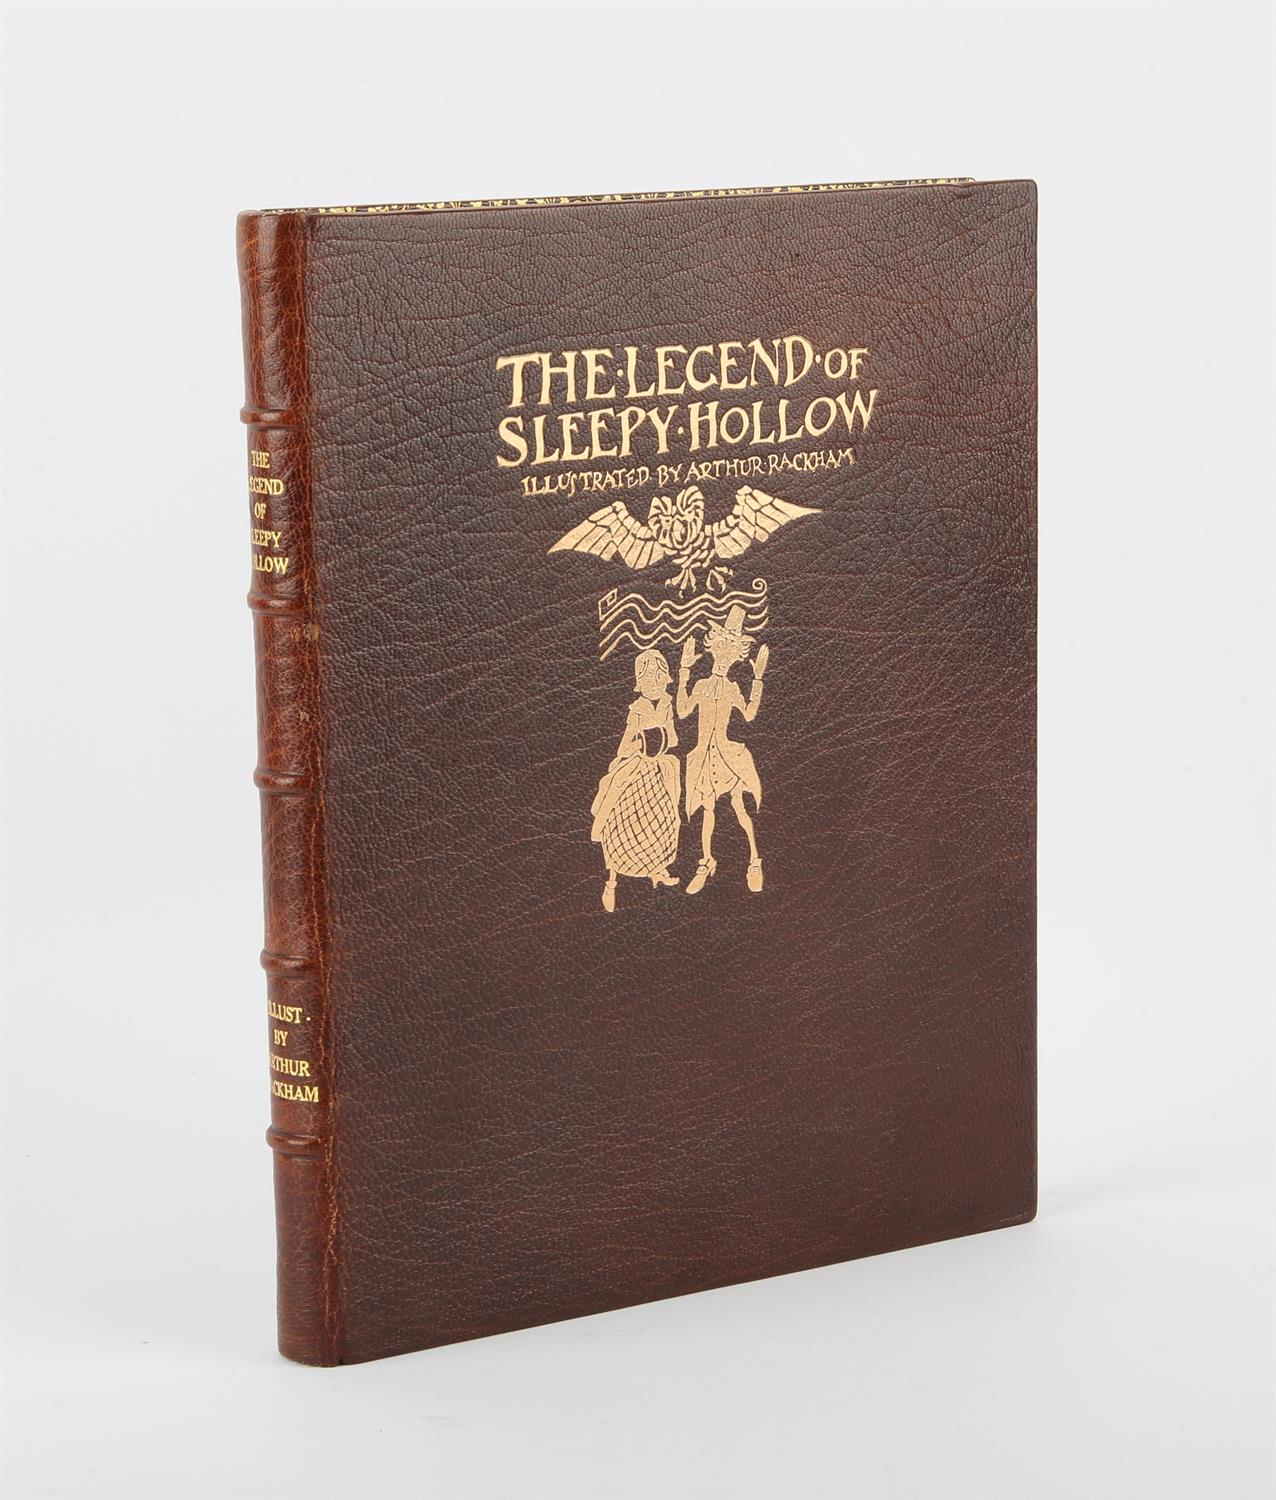 Rackham, Arthur, 'The Legend of Sleepy Hollow' by Washington Irving, Philadelphia,